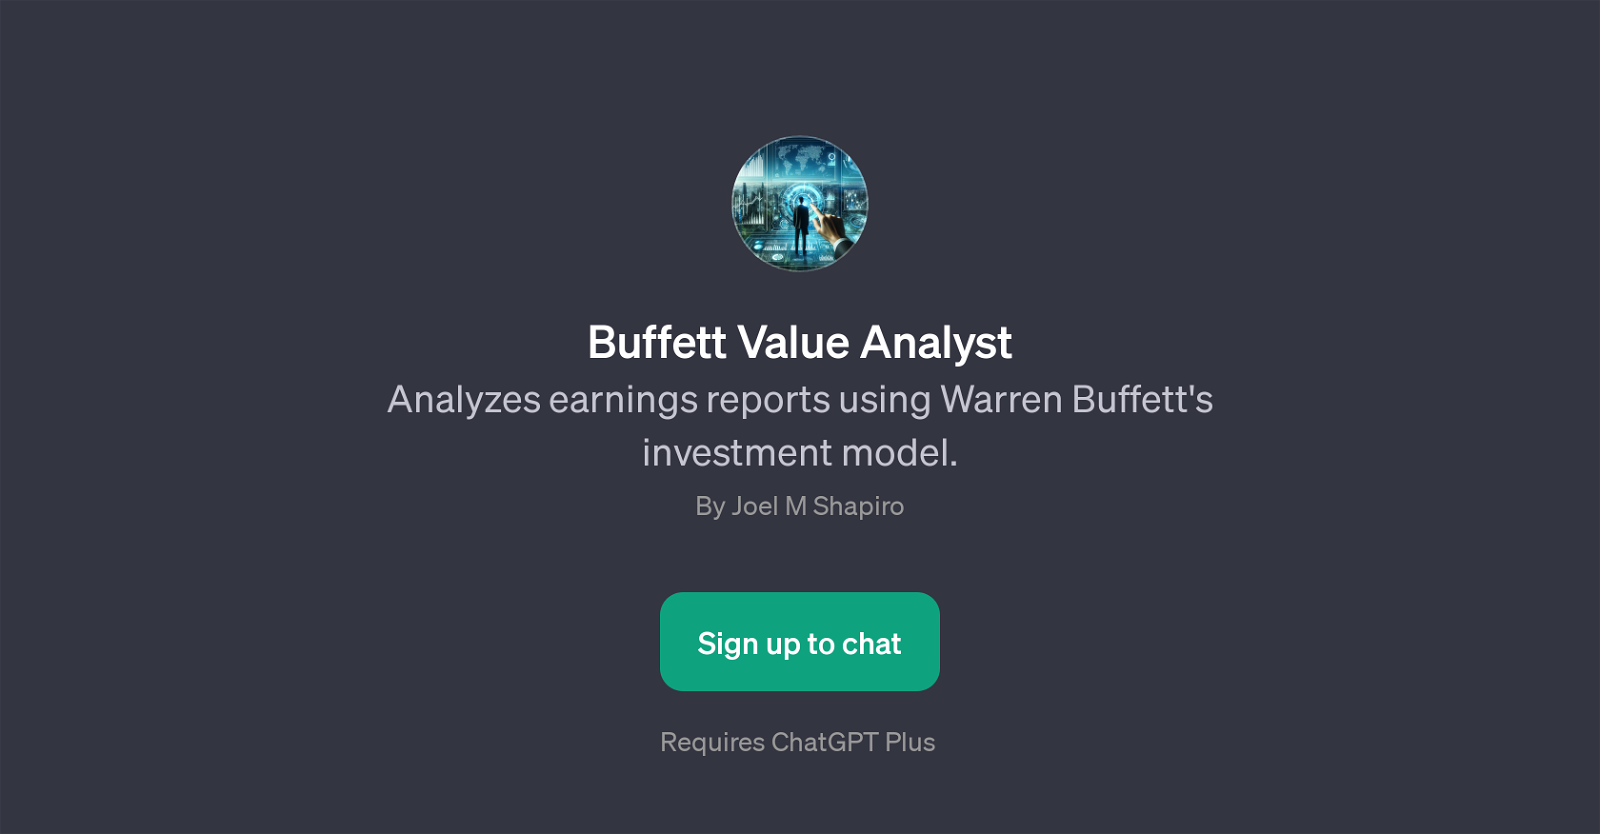 Buffett Value Analyst website